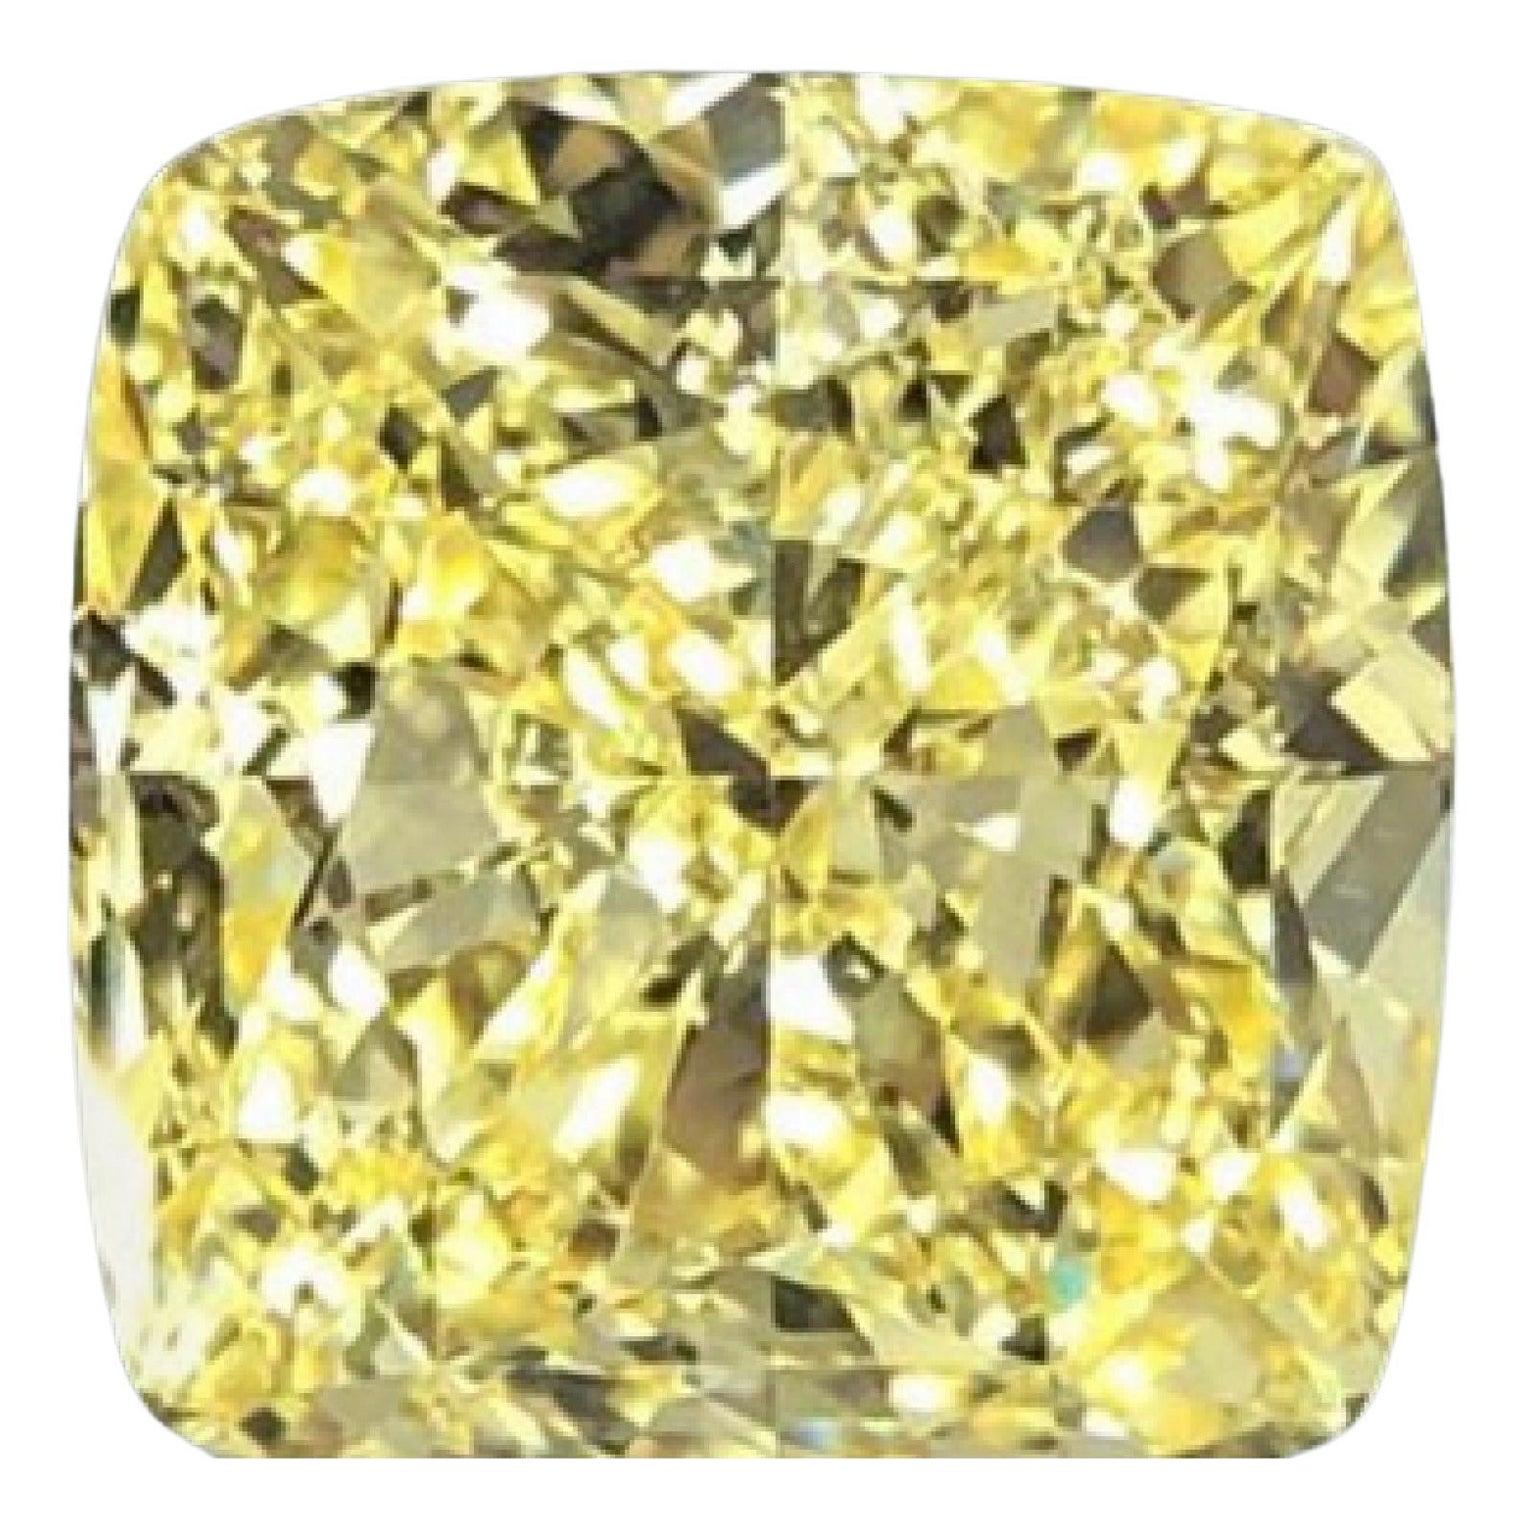 GIA Certified 14 Carat Yellow Cushion Cut Diamond flawless For Sale